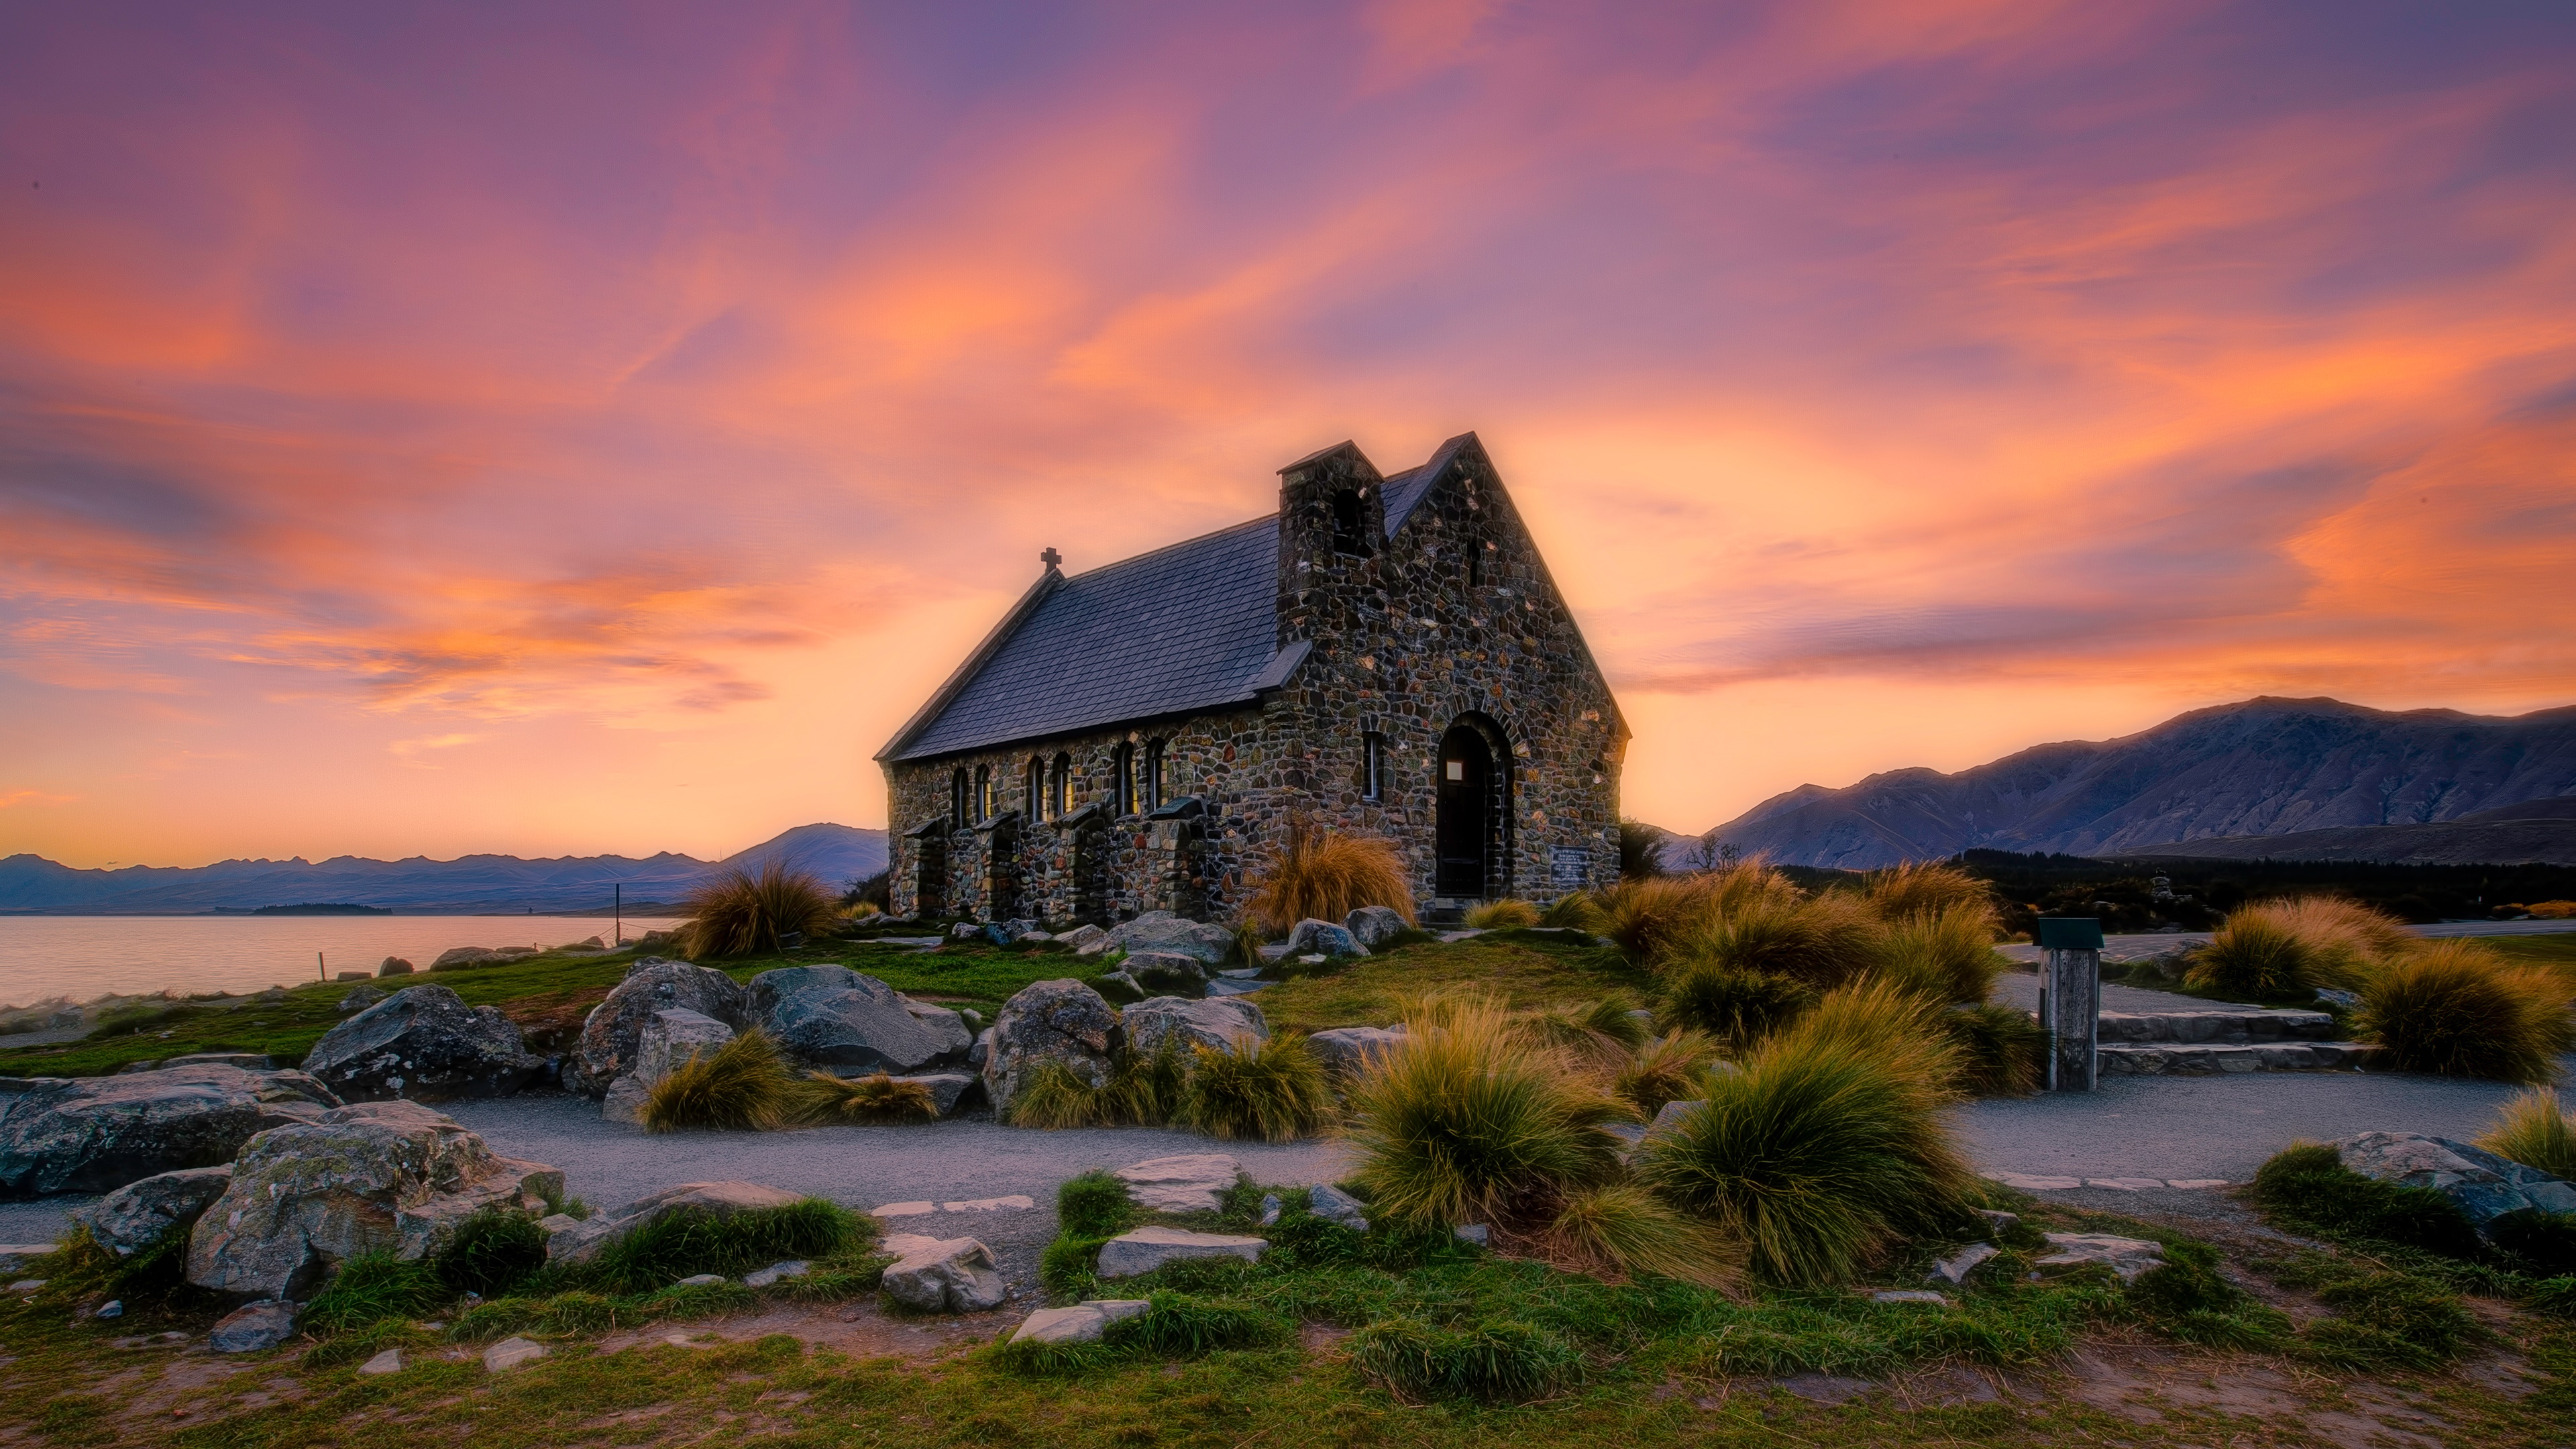 Small Church At Sunset 4k Ultra HD Wallpaper Background Image